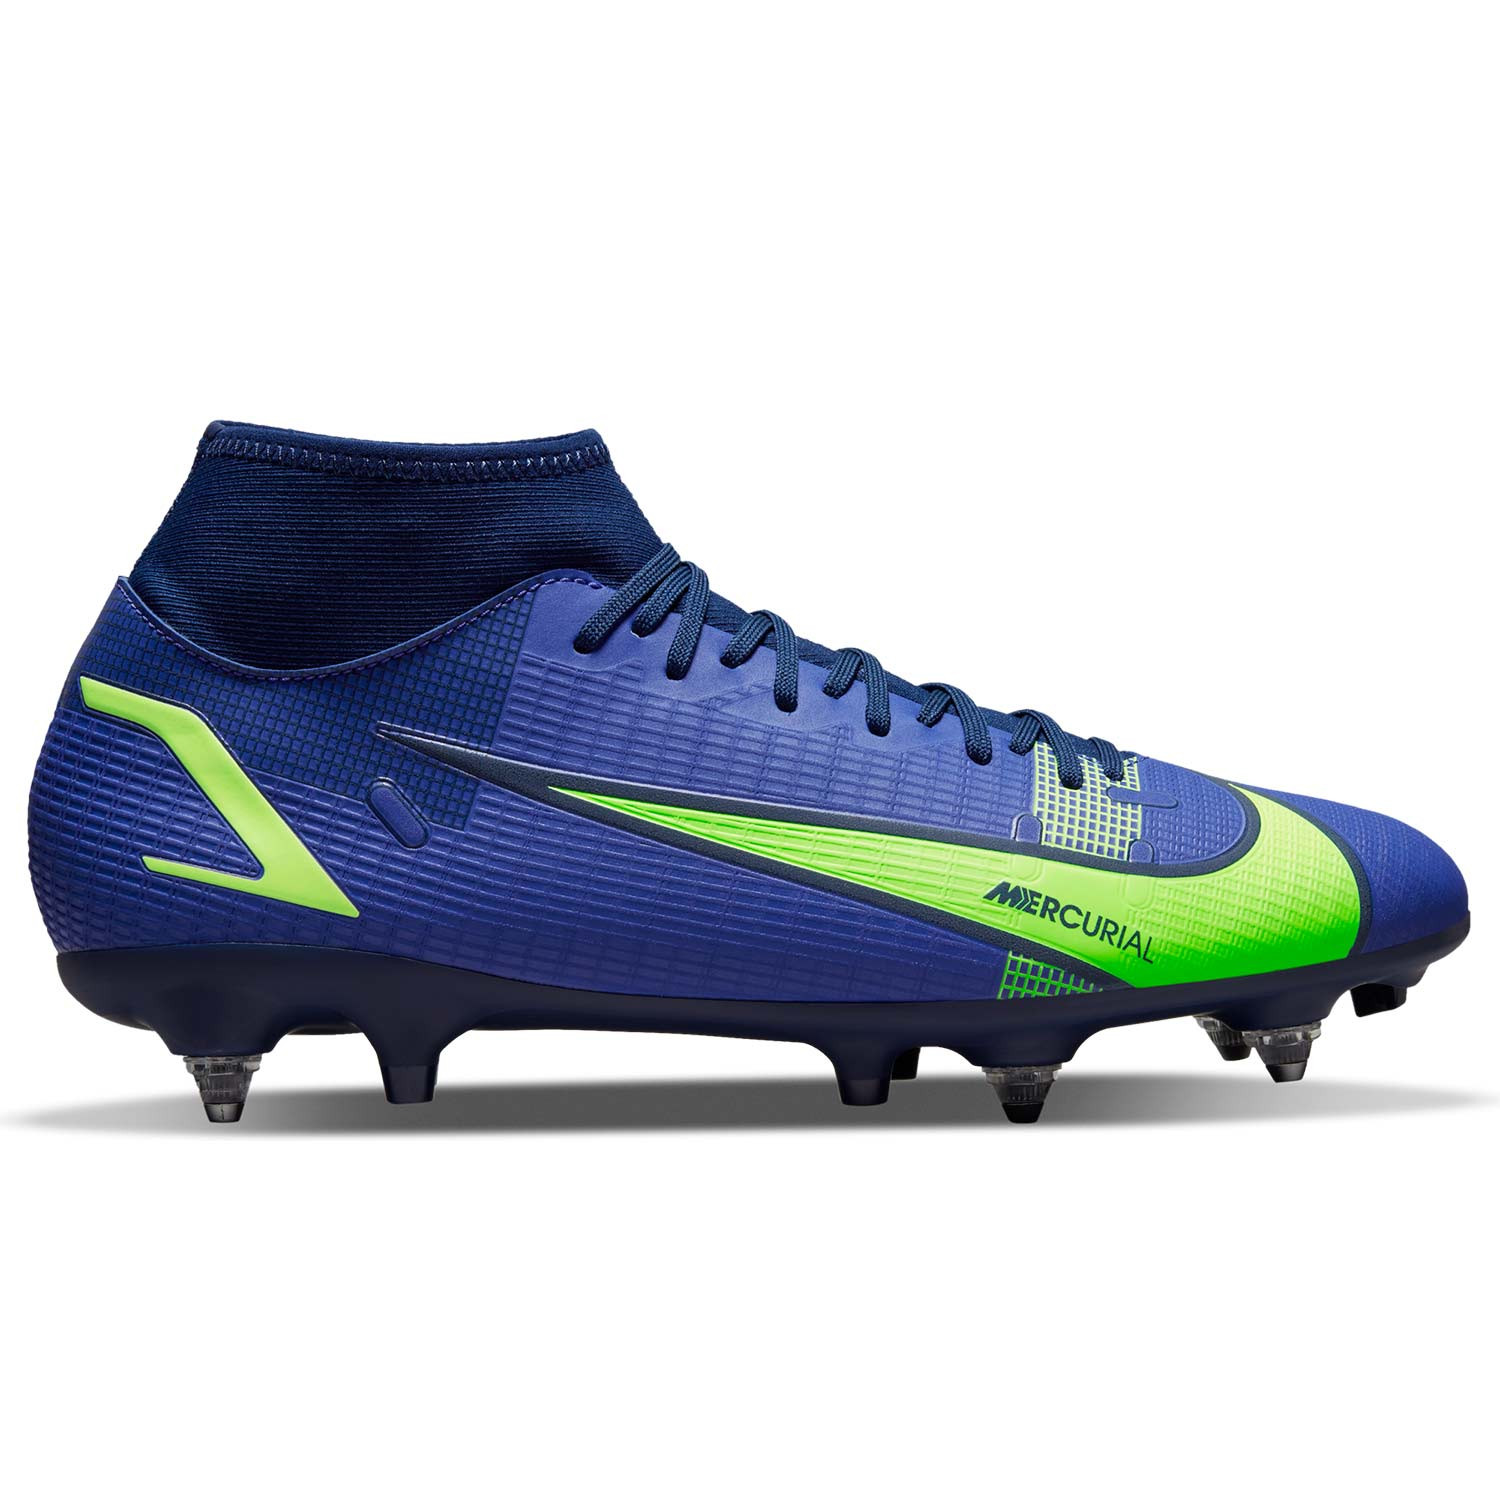 Nike Mercurial Superfly SG-PRO azules | futbolmania